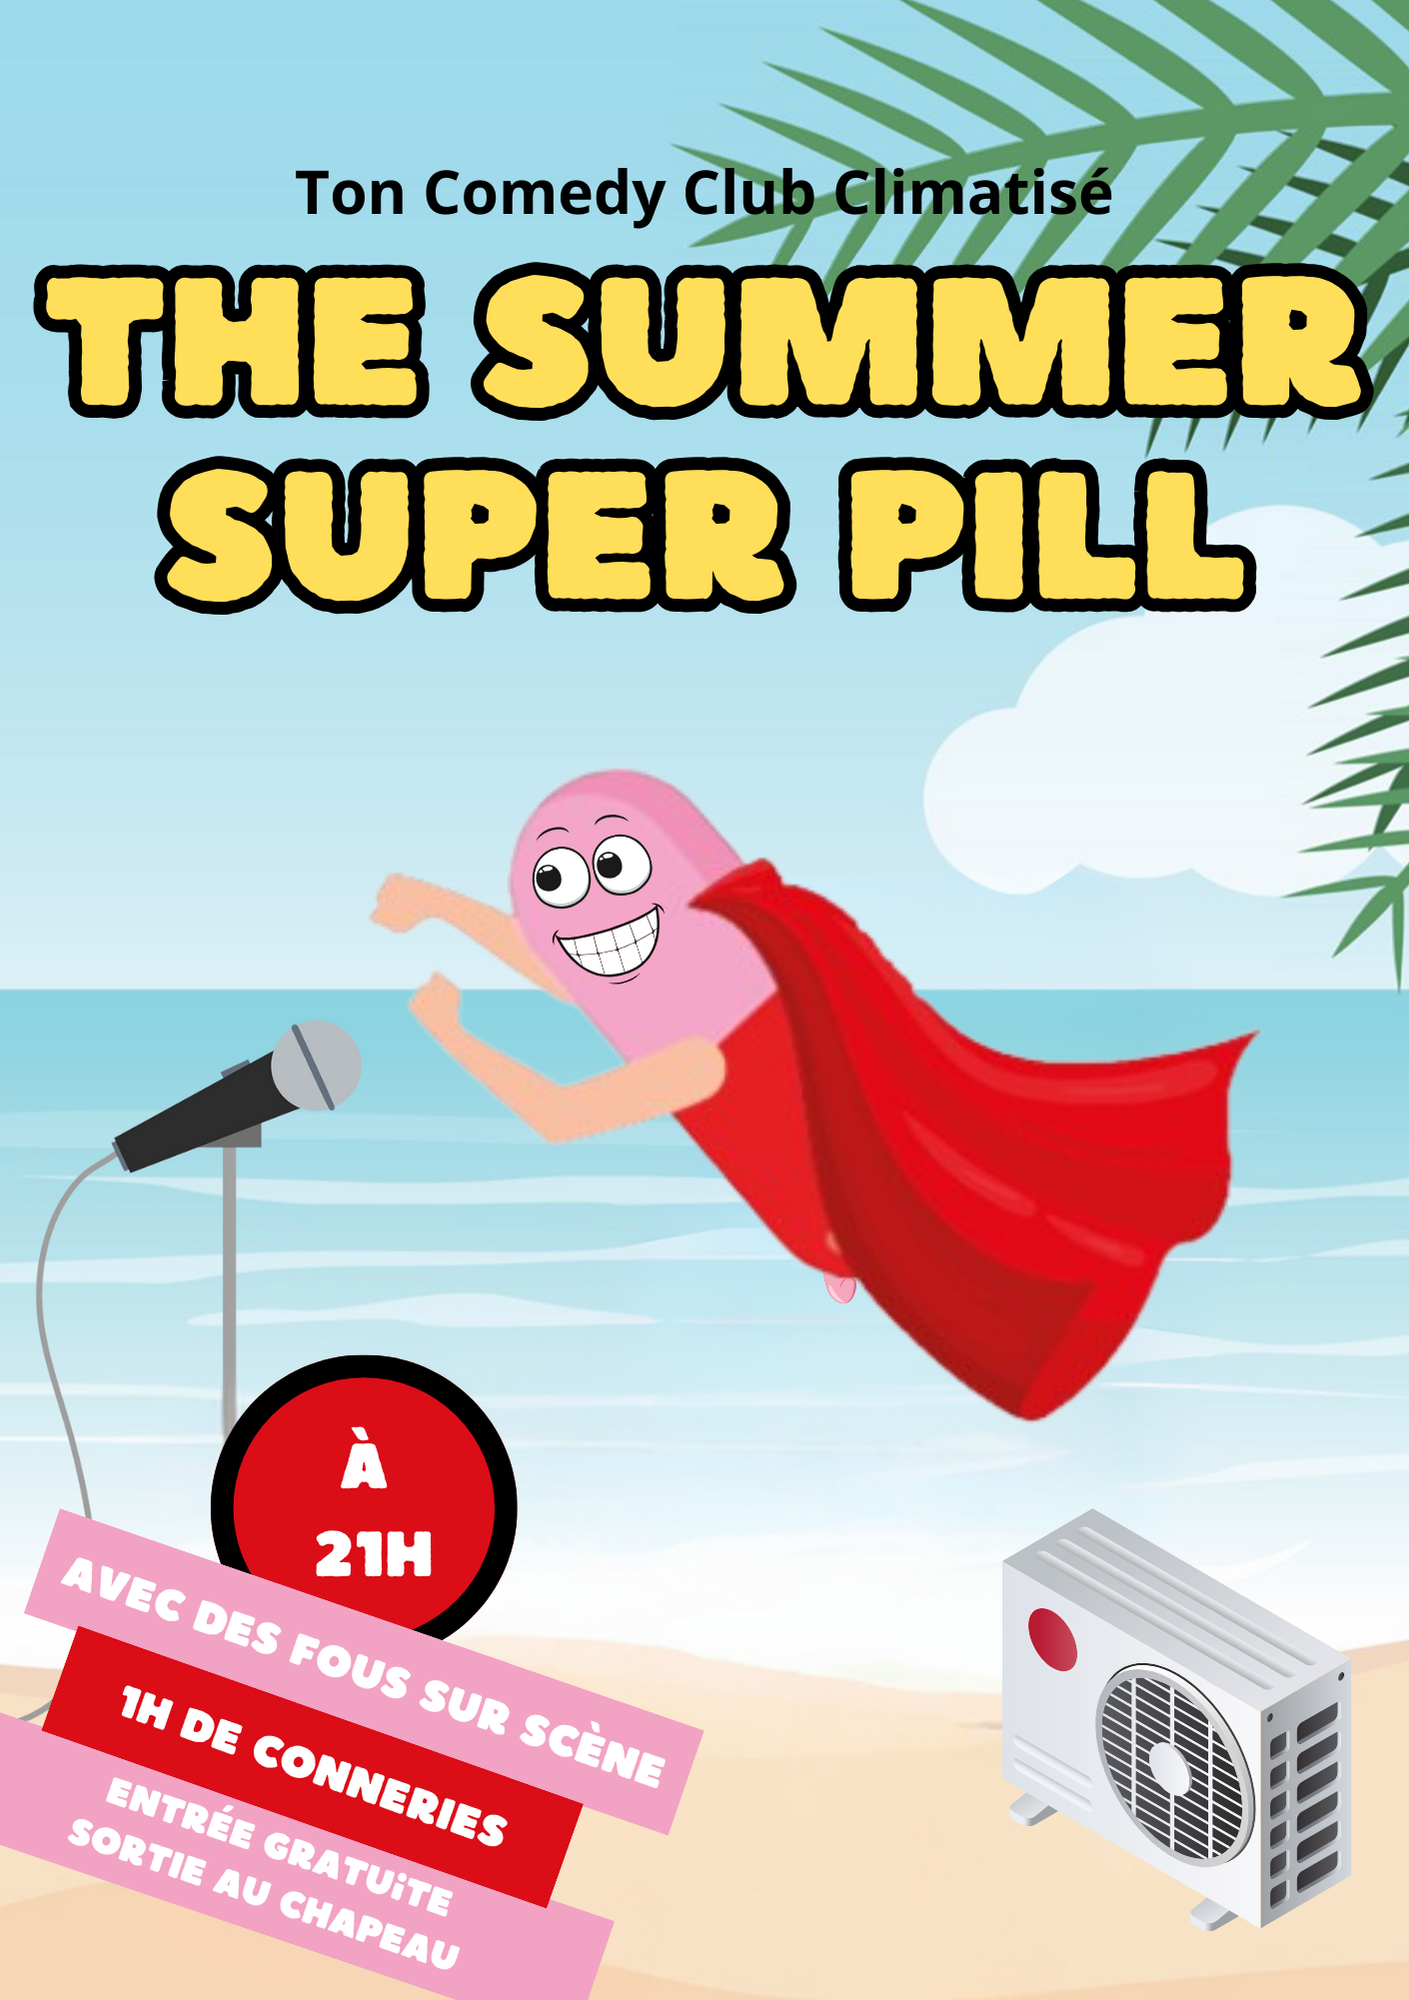 The Summer Super Pilule